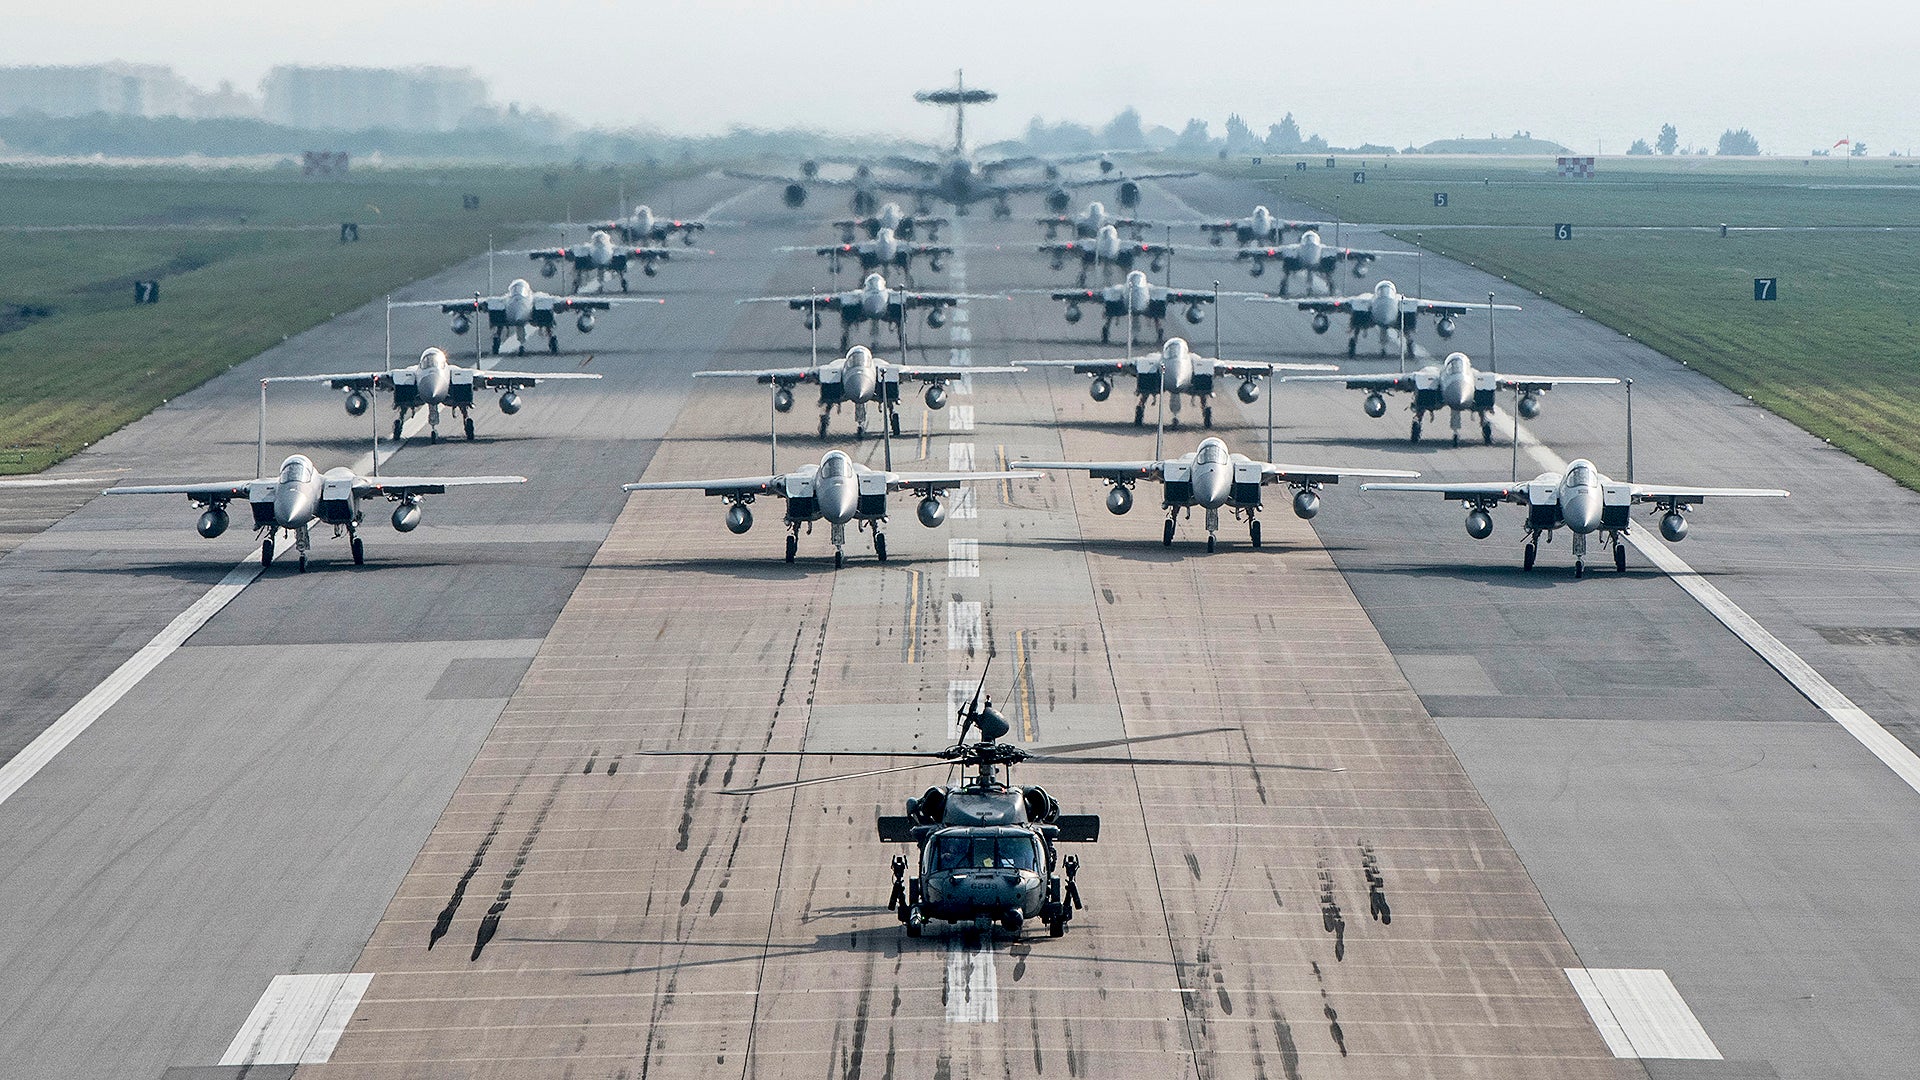 Kadena Air Base Shows Its Firepower During Surprise “Elephant Walk” Drill